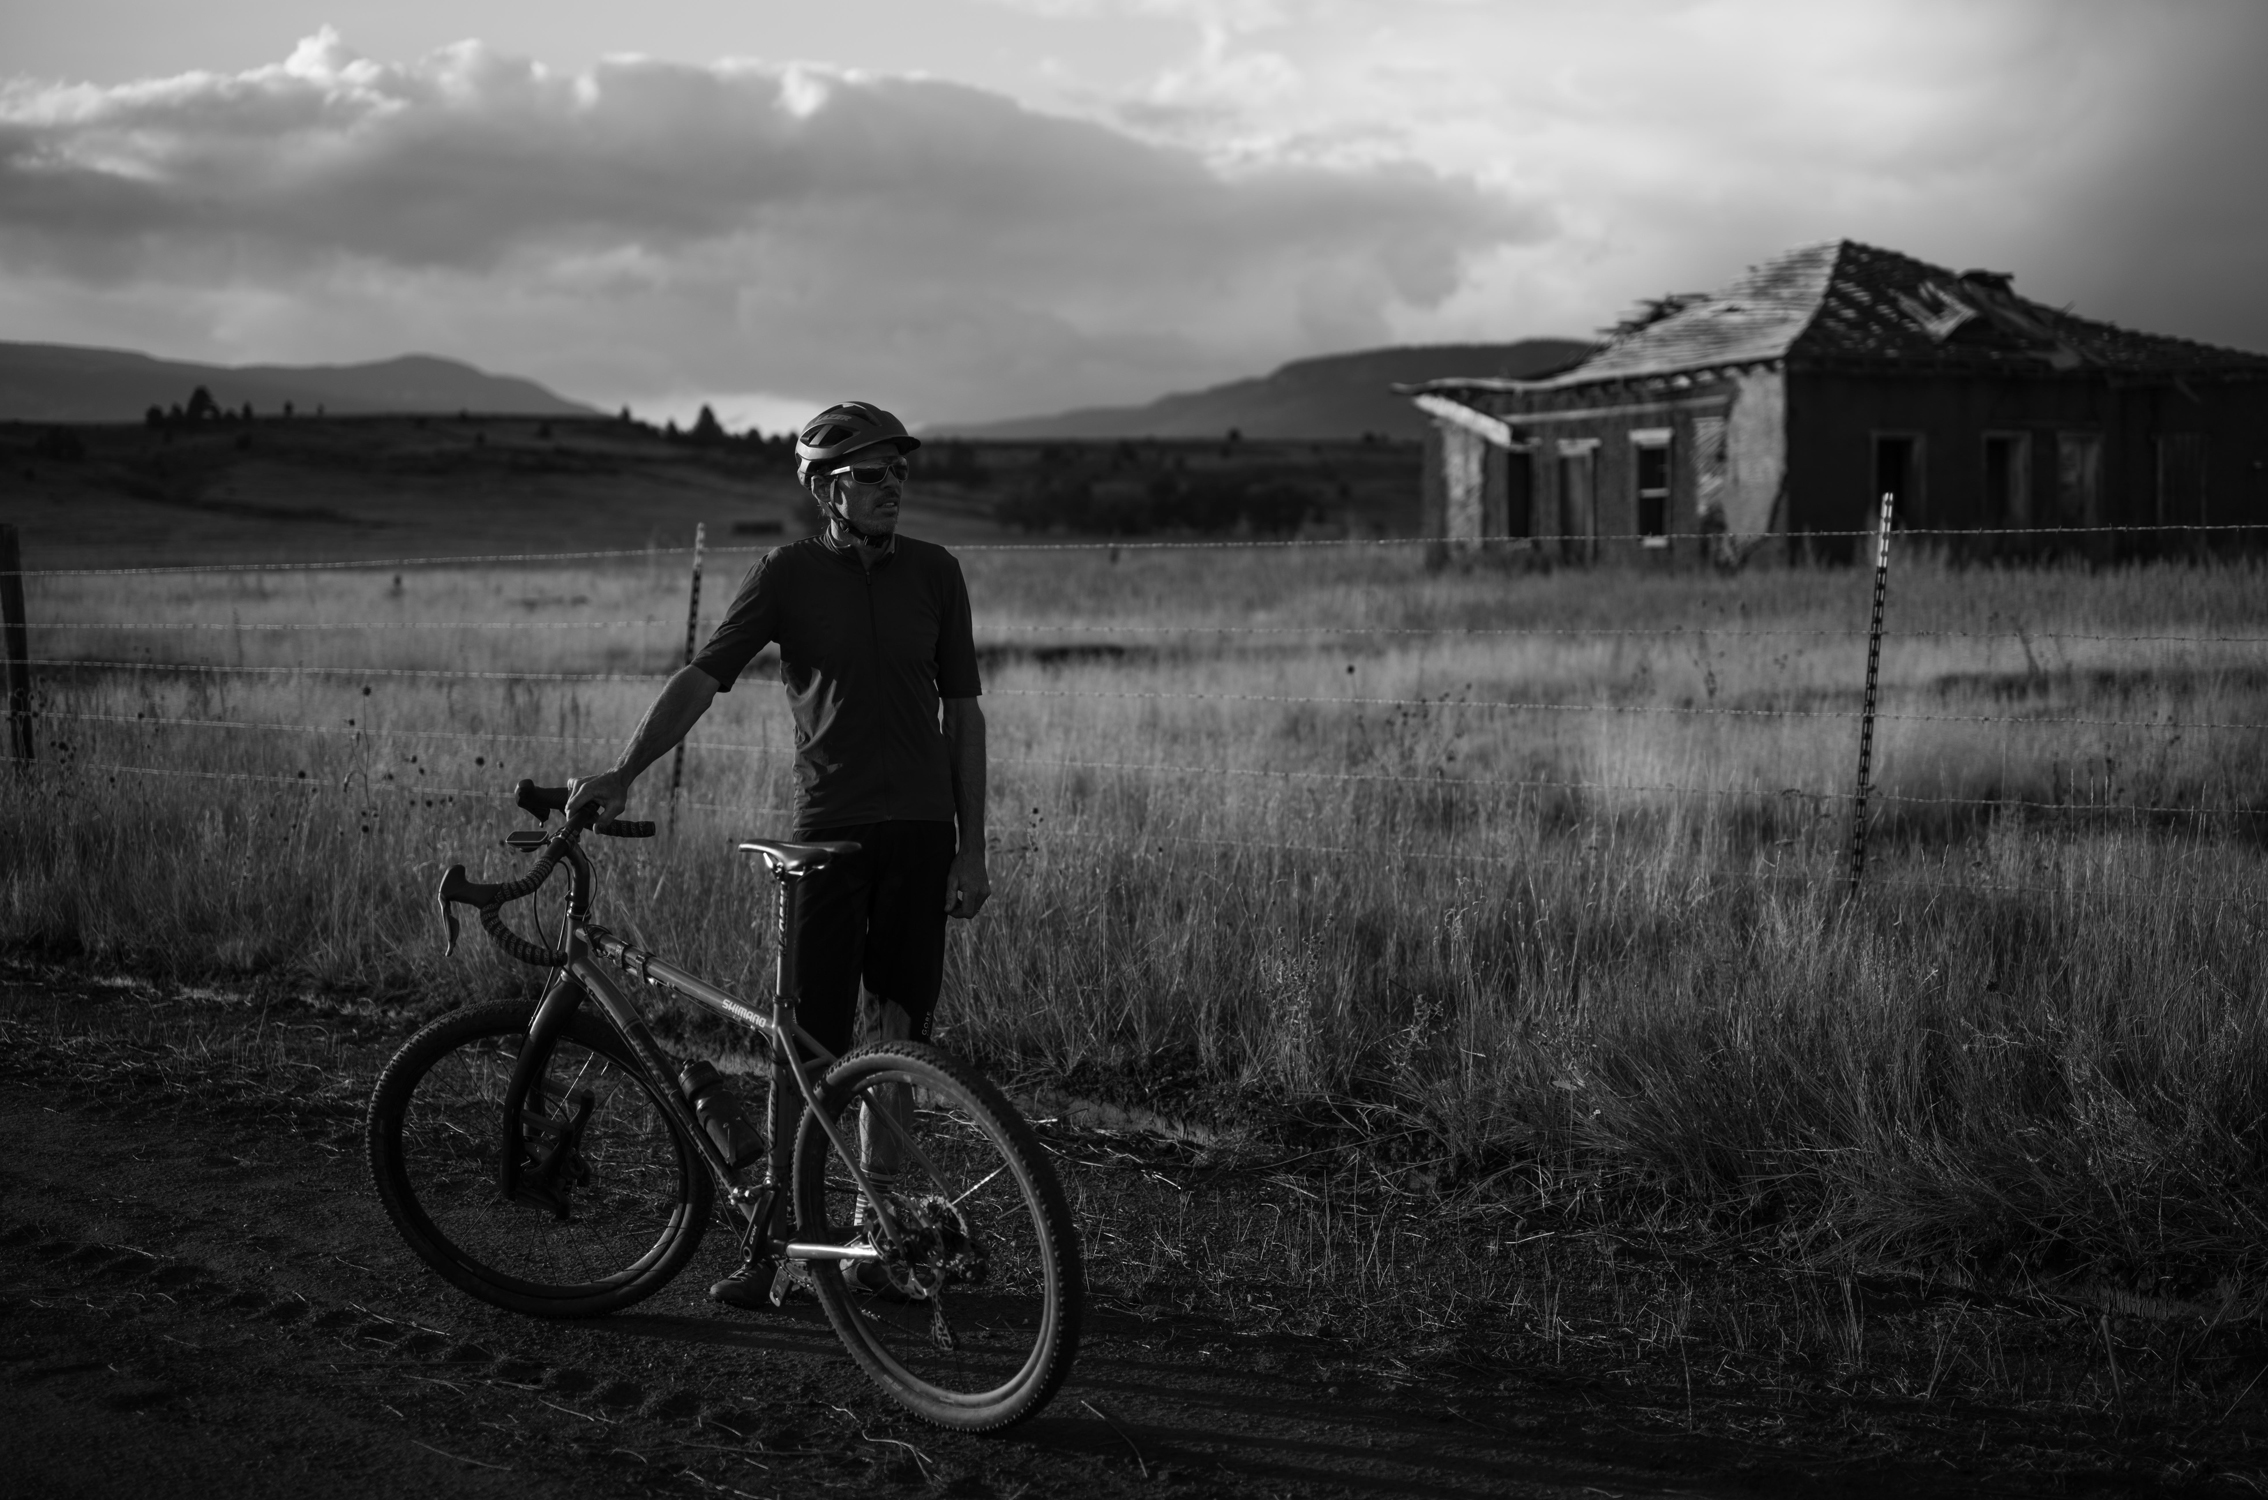 Alex Morgan riding his gravel bike in New Mexico black and white